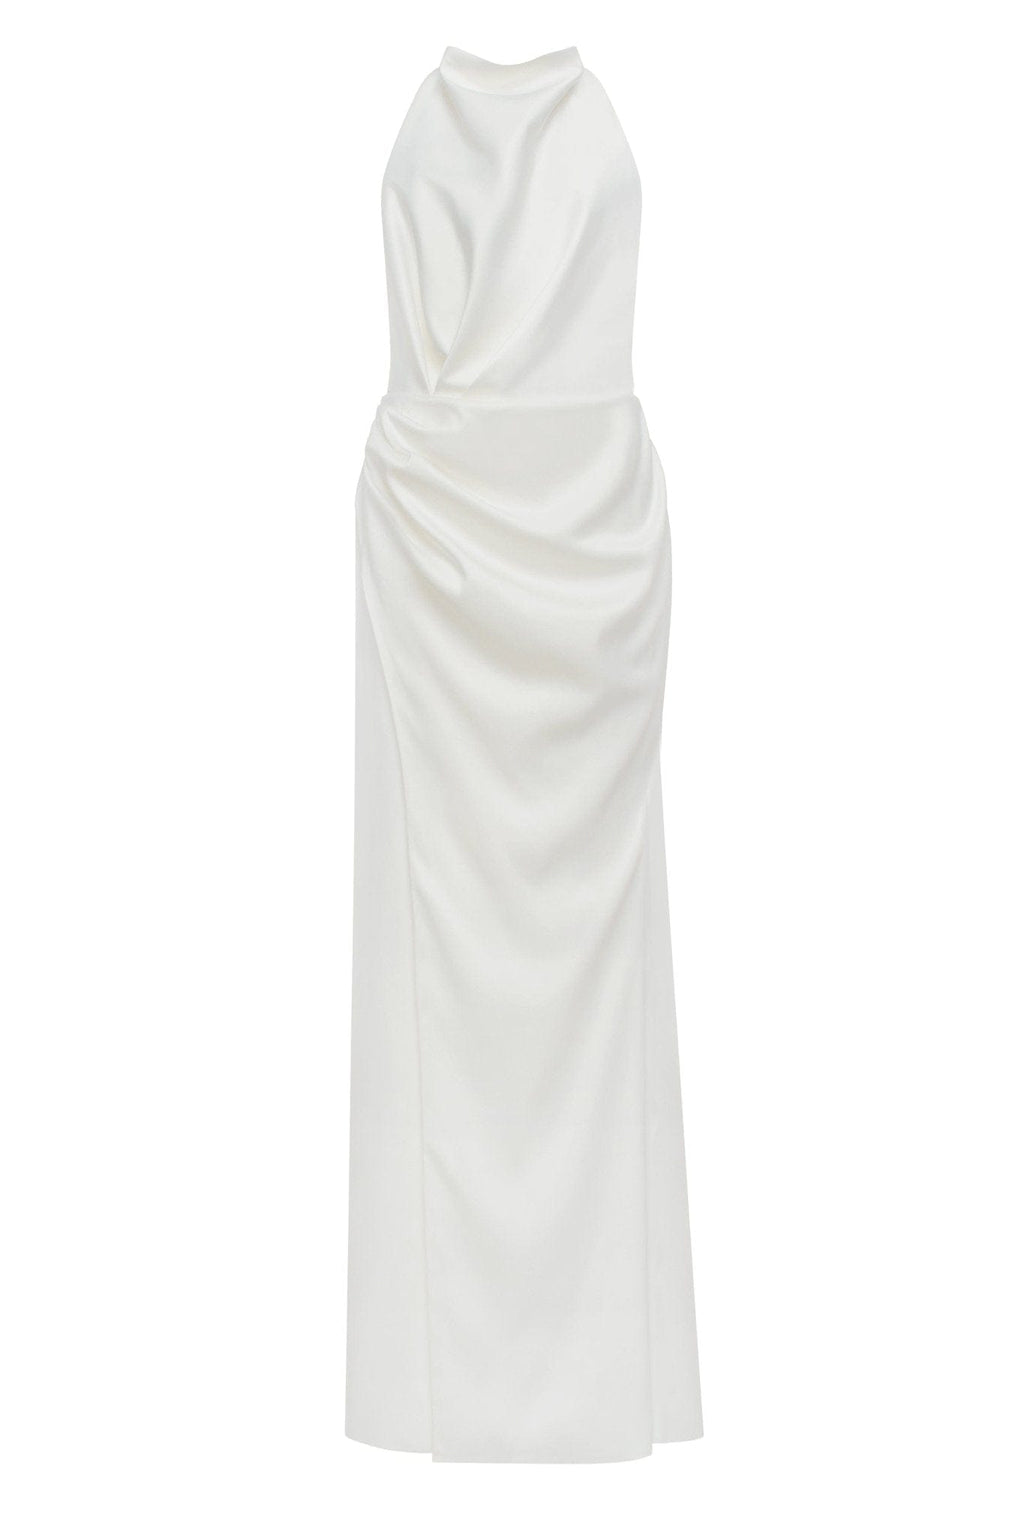 High-rise white suit pants, Xo Xo ➤➤ Milla Dresses - USA